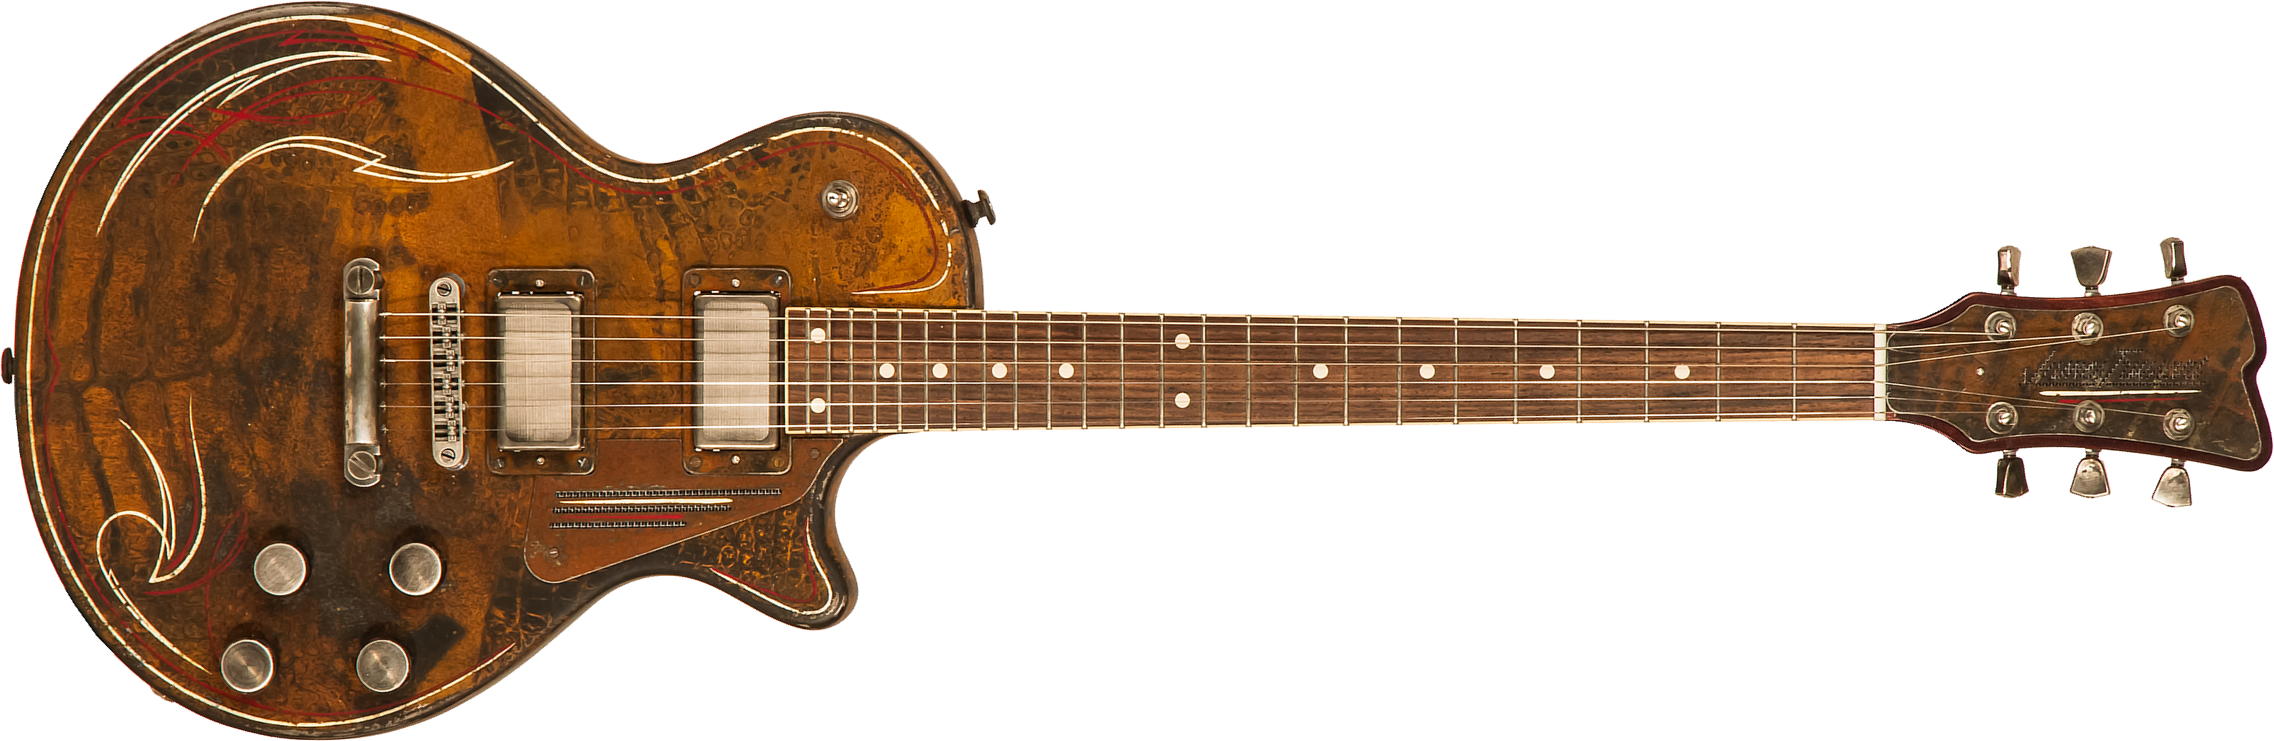 James Trussart Steeldeville Perf.back 2h Ht Rw #21171 - Rust O Matic Pinstriped - Guitarra eléctrica de corte único. - Main picture